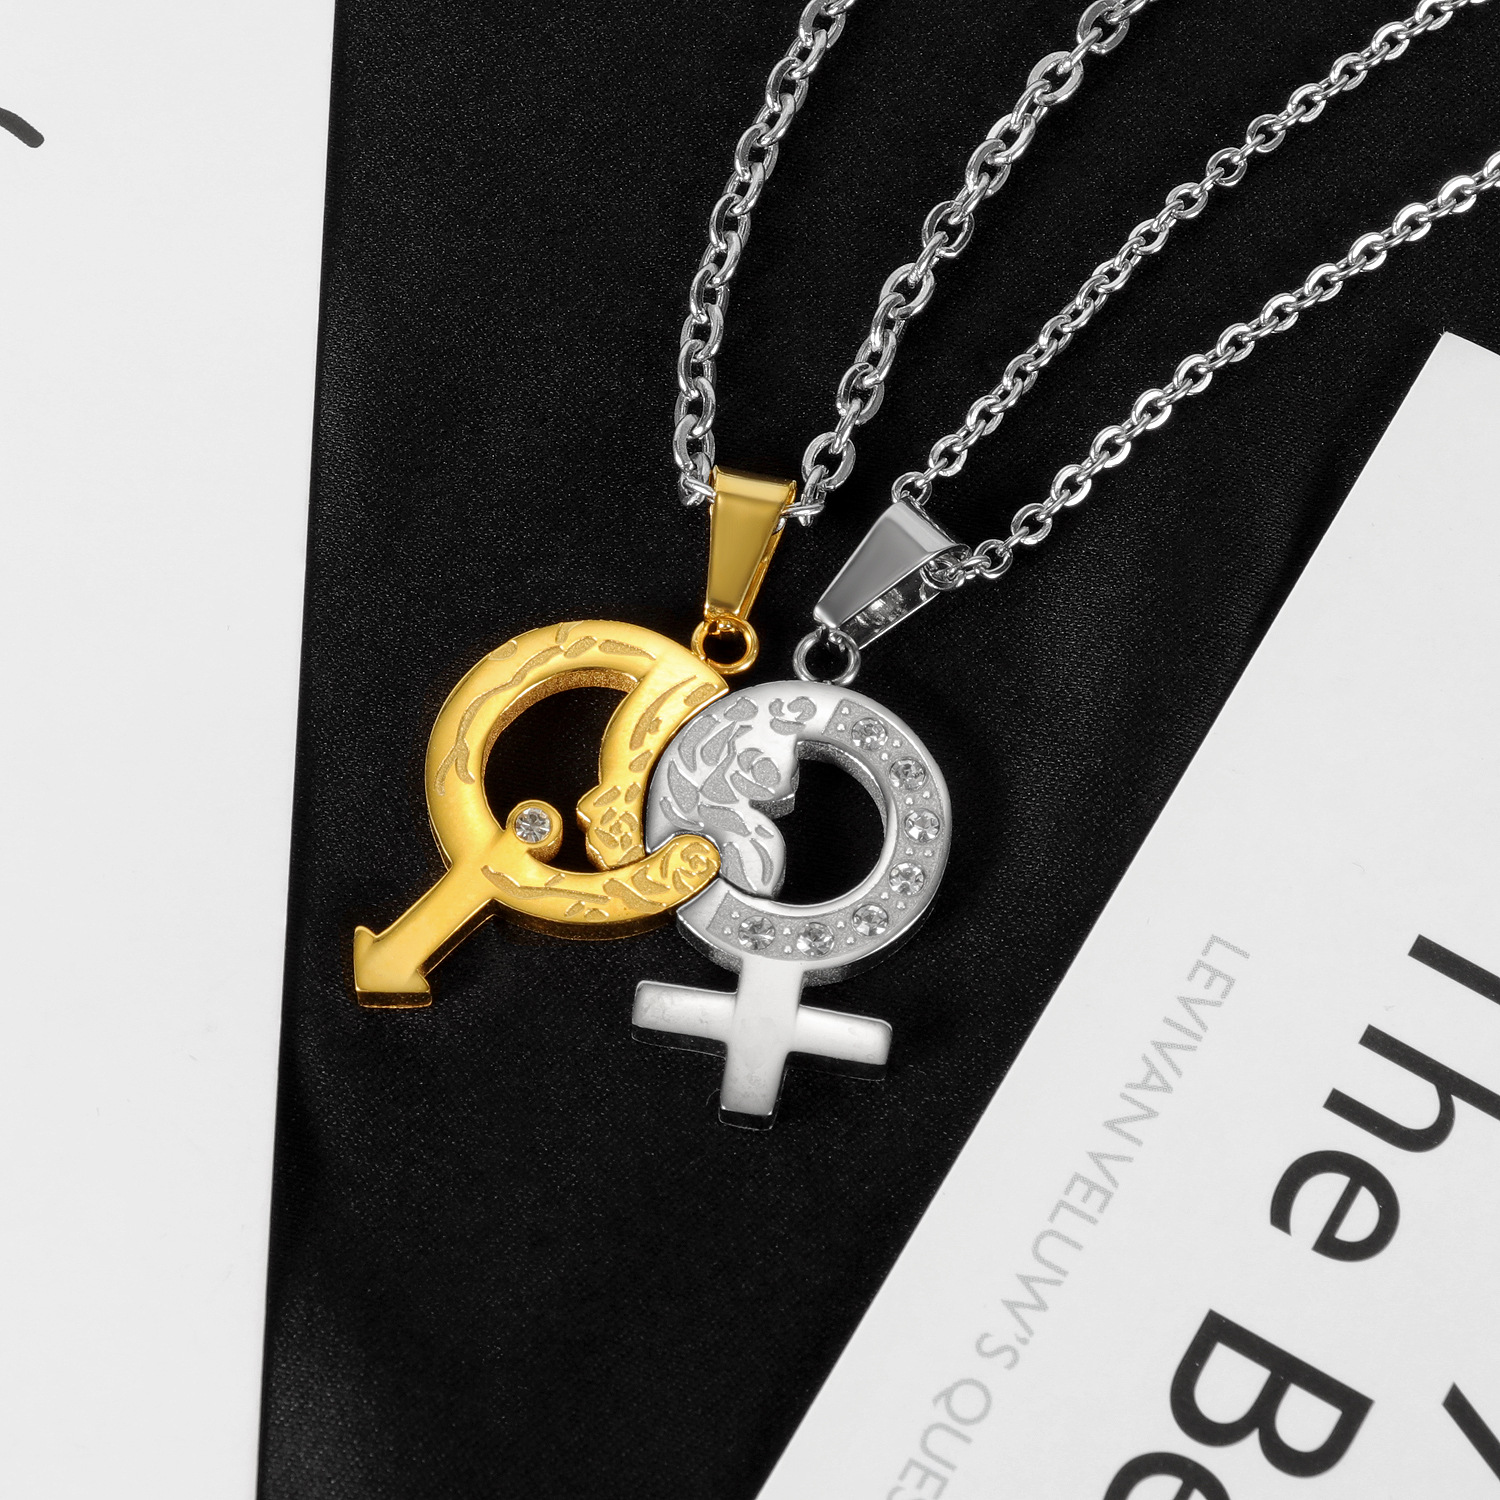 4:Between gold pendant necklace